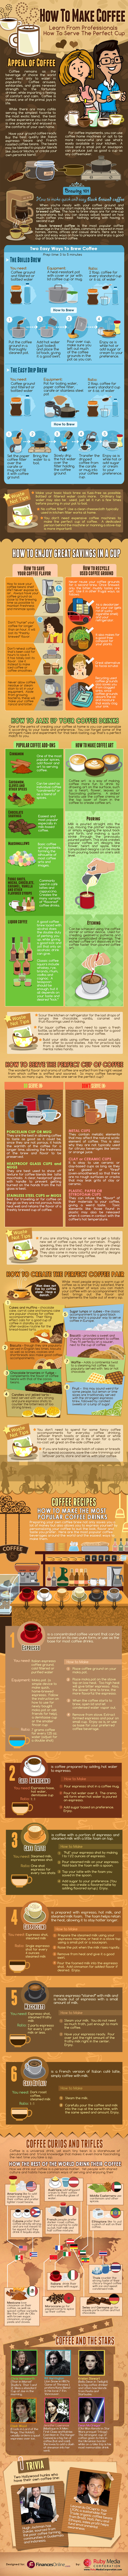 How to Make Coffee and Share Fun Coffee Tips Like a Pro